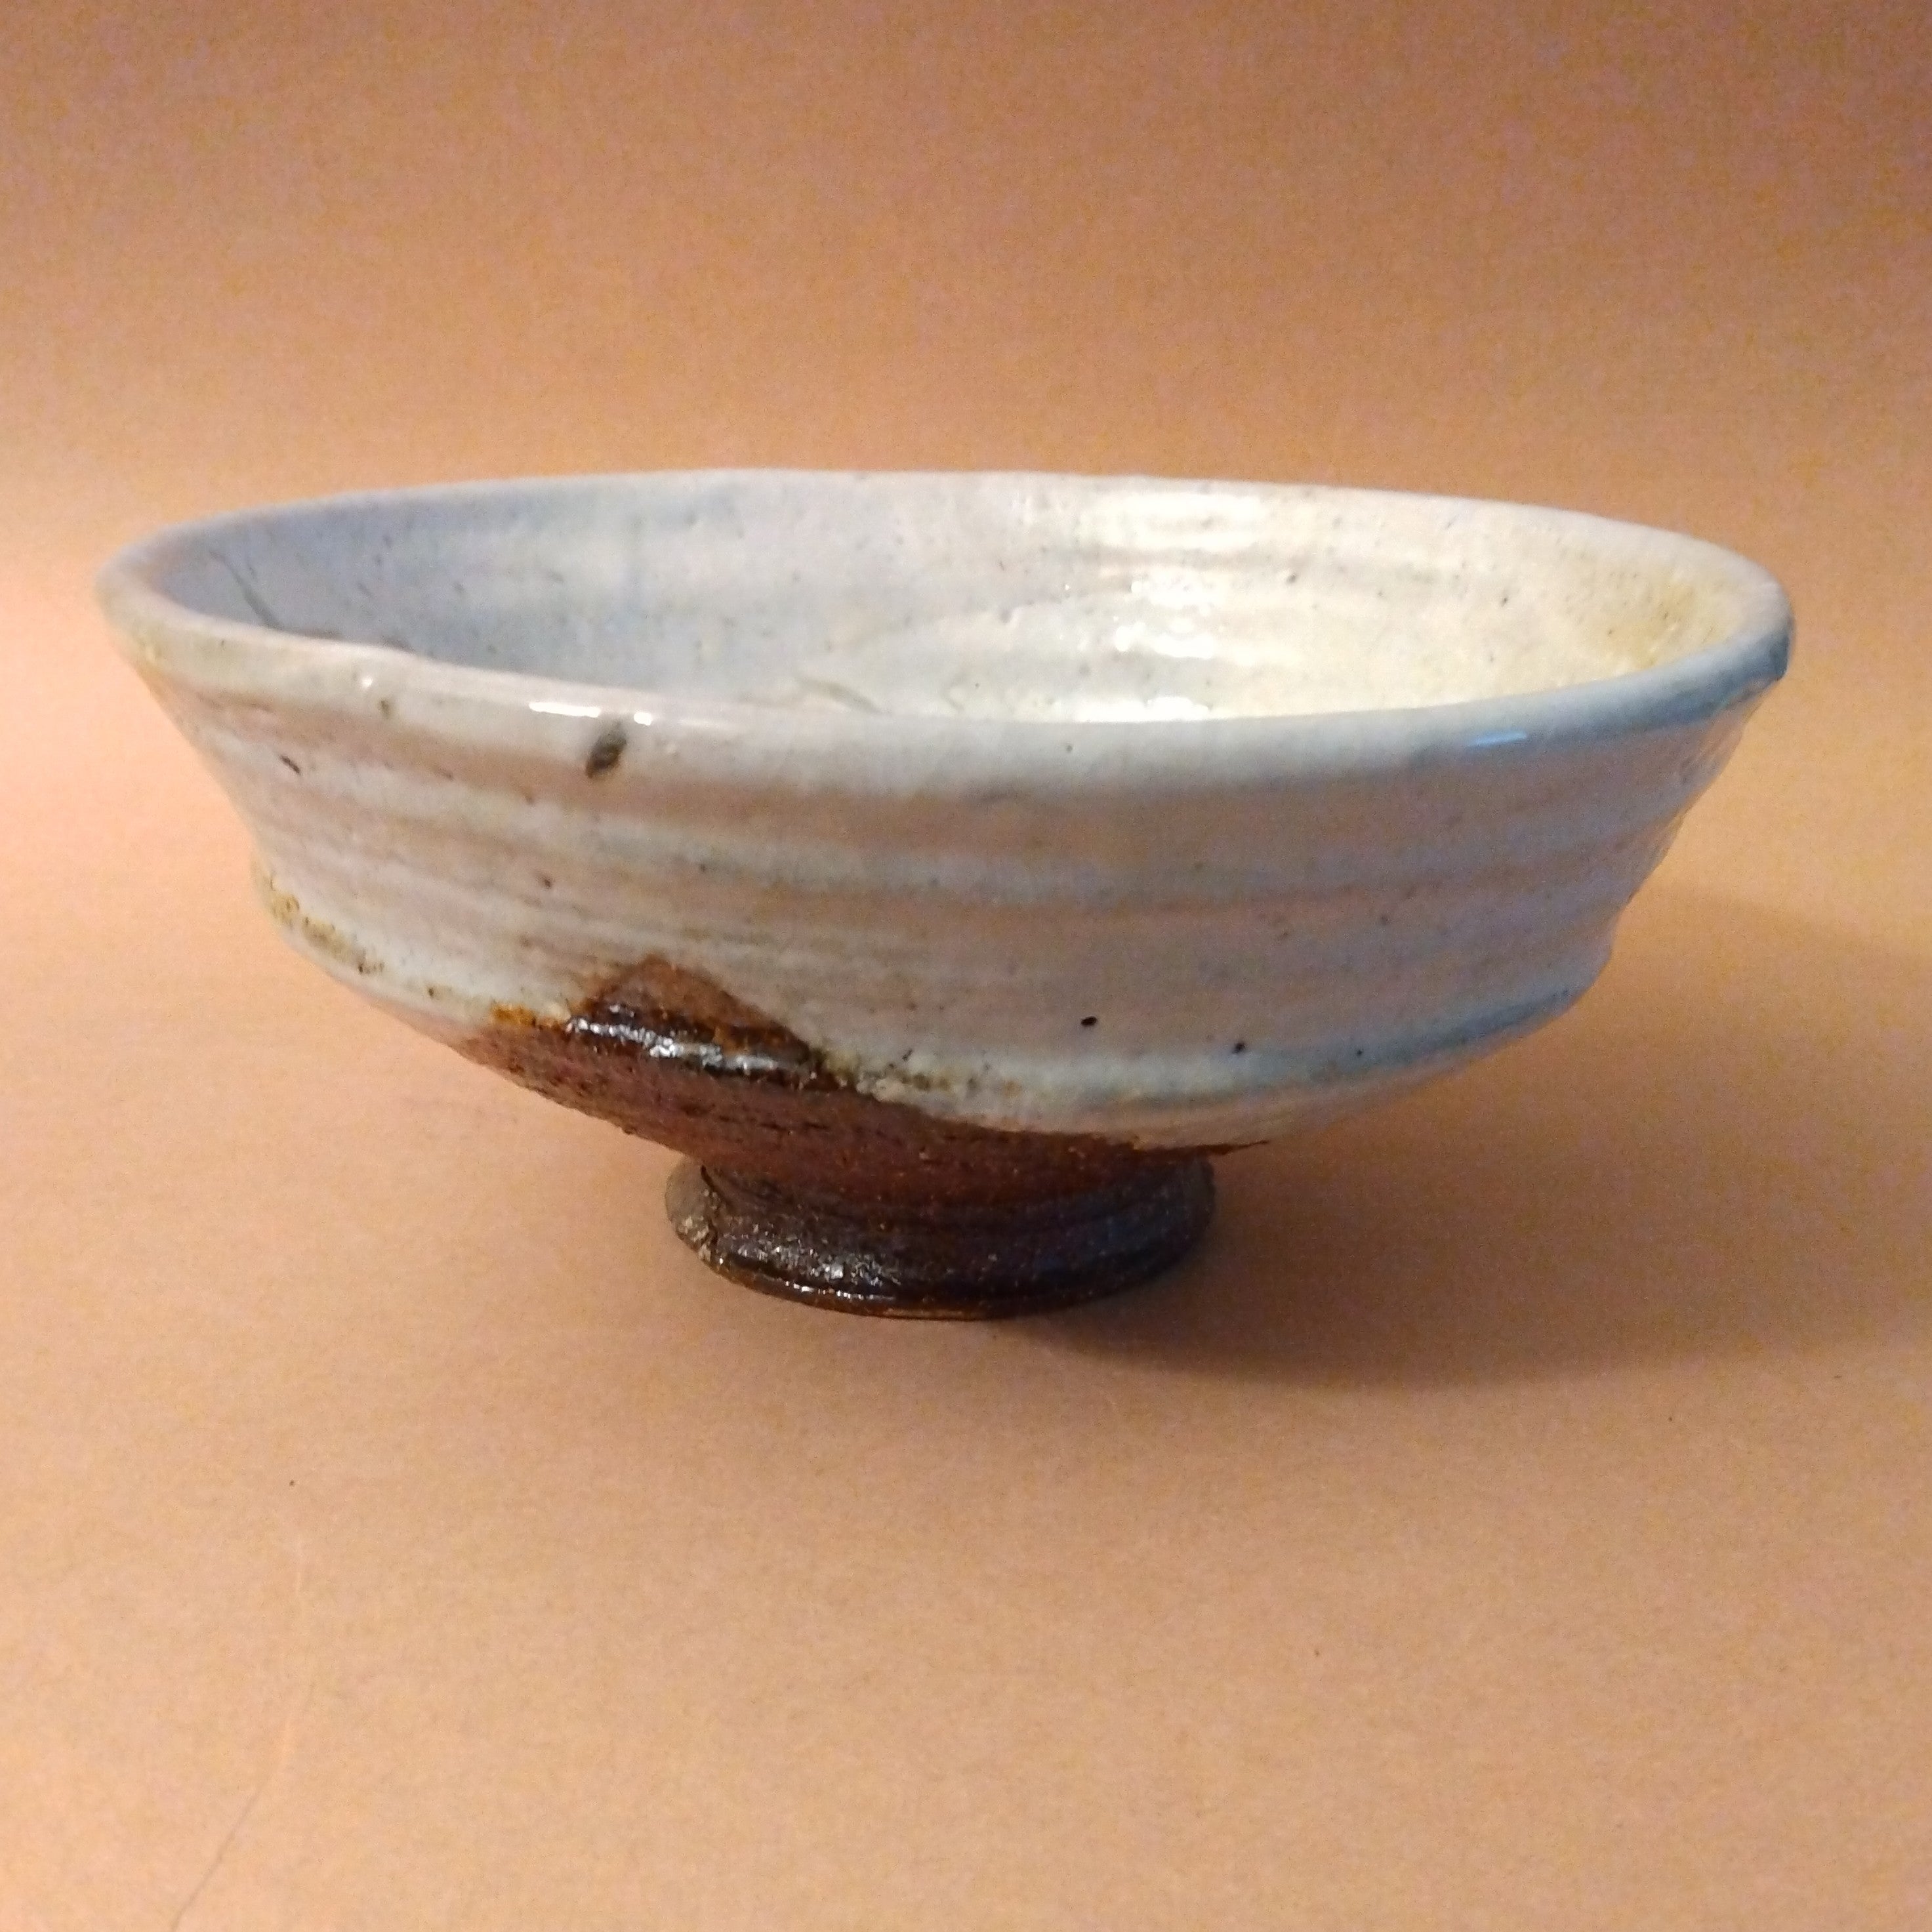 Wood-fired Shino Glaze Bowl, by George Gledhill